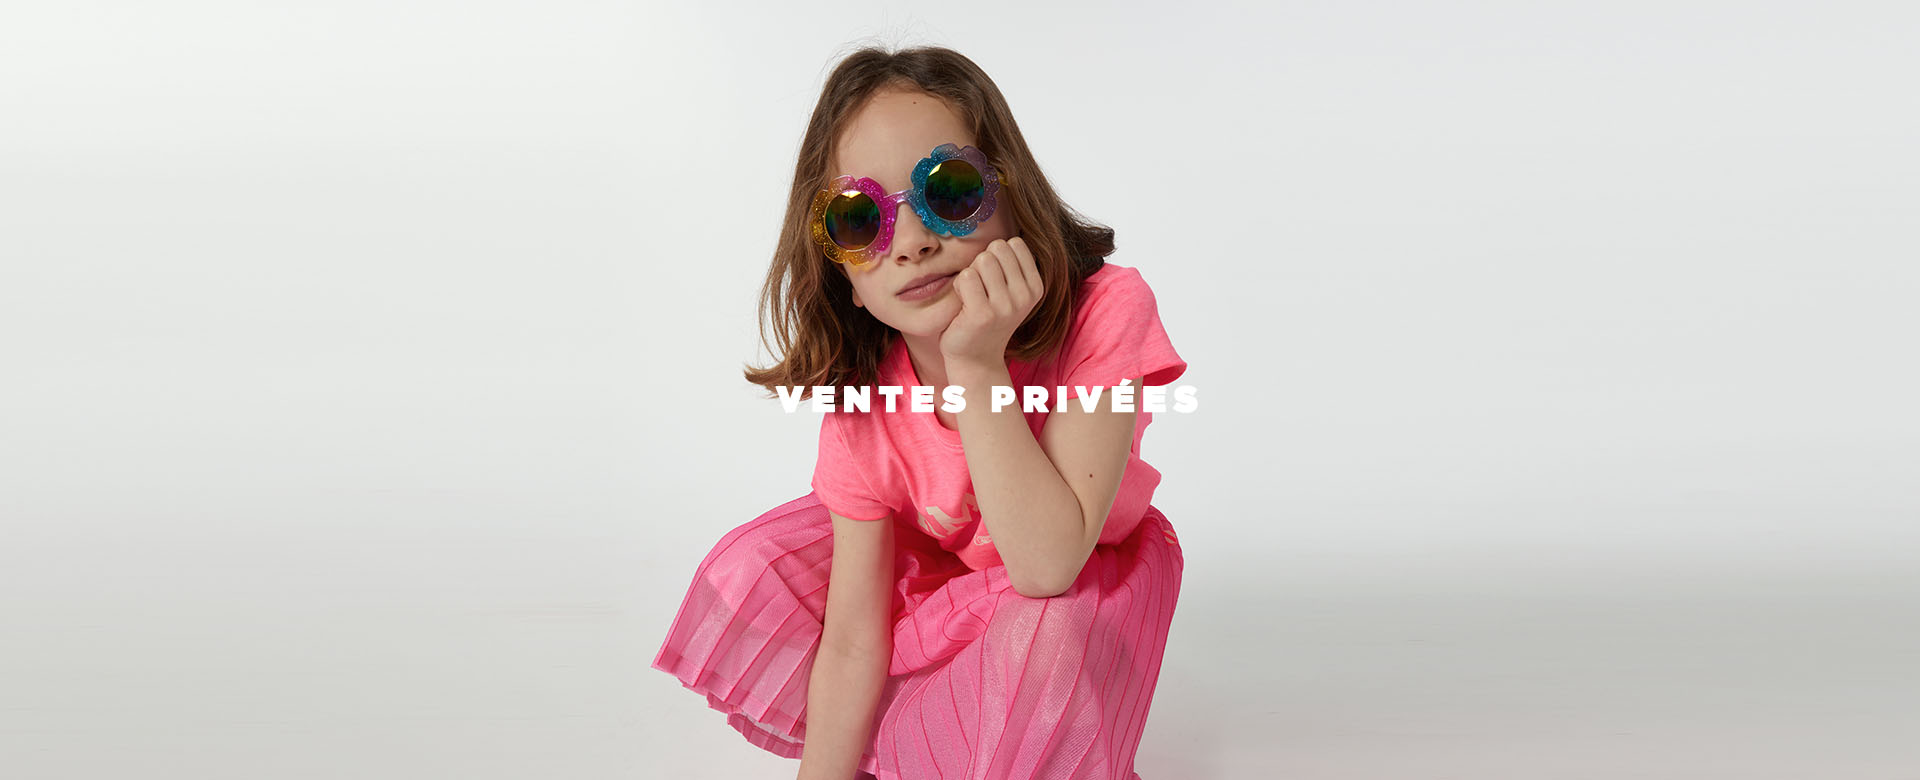 ventes privées mode enfant kids around